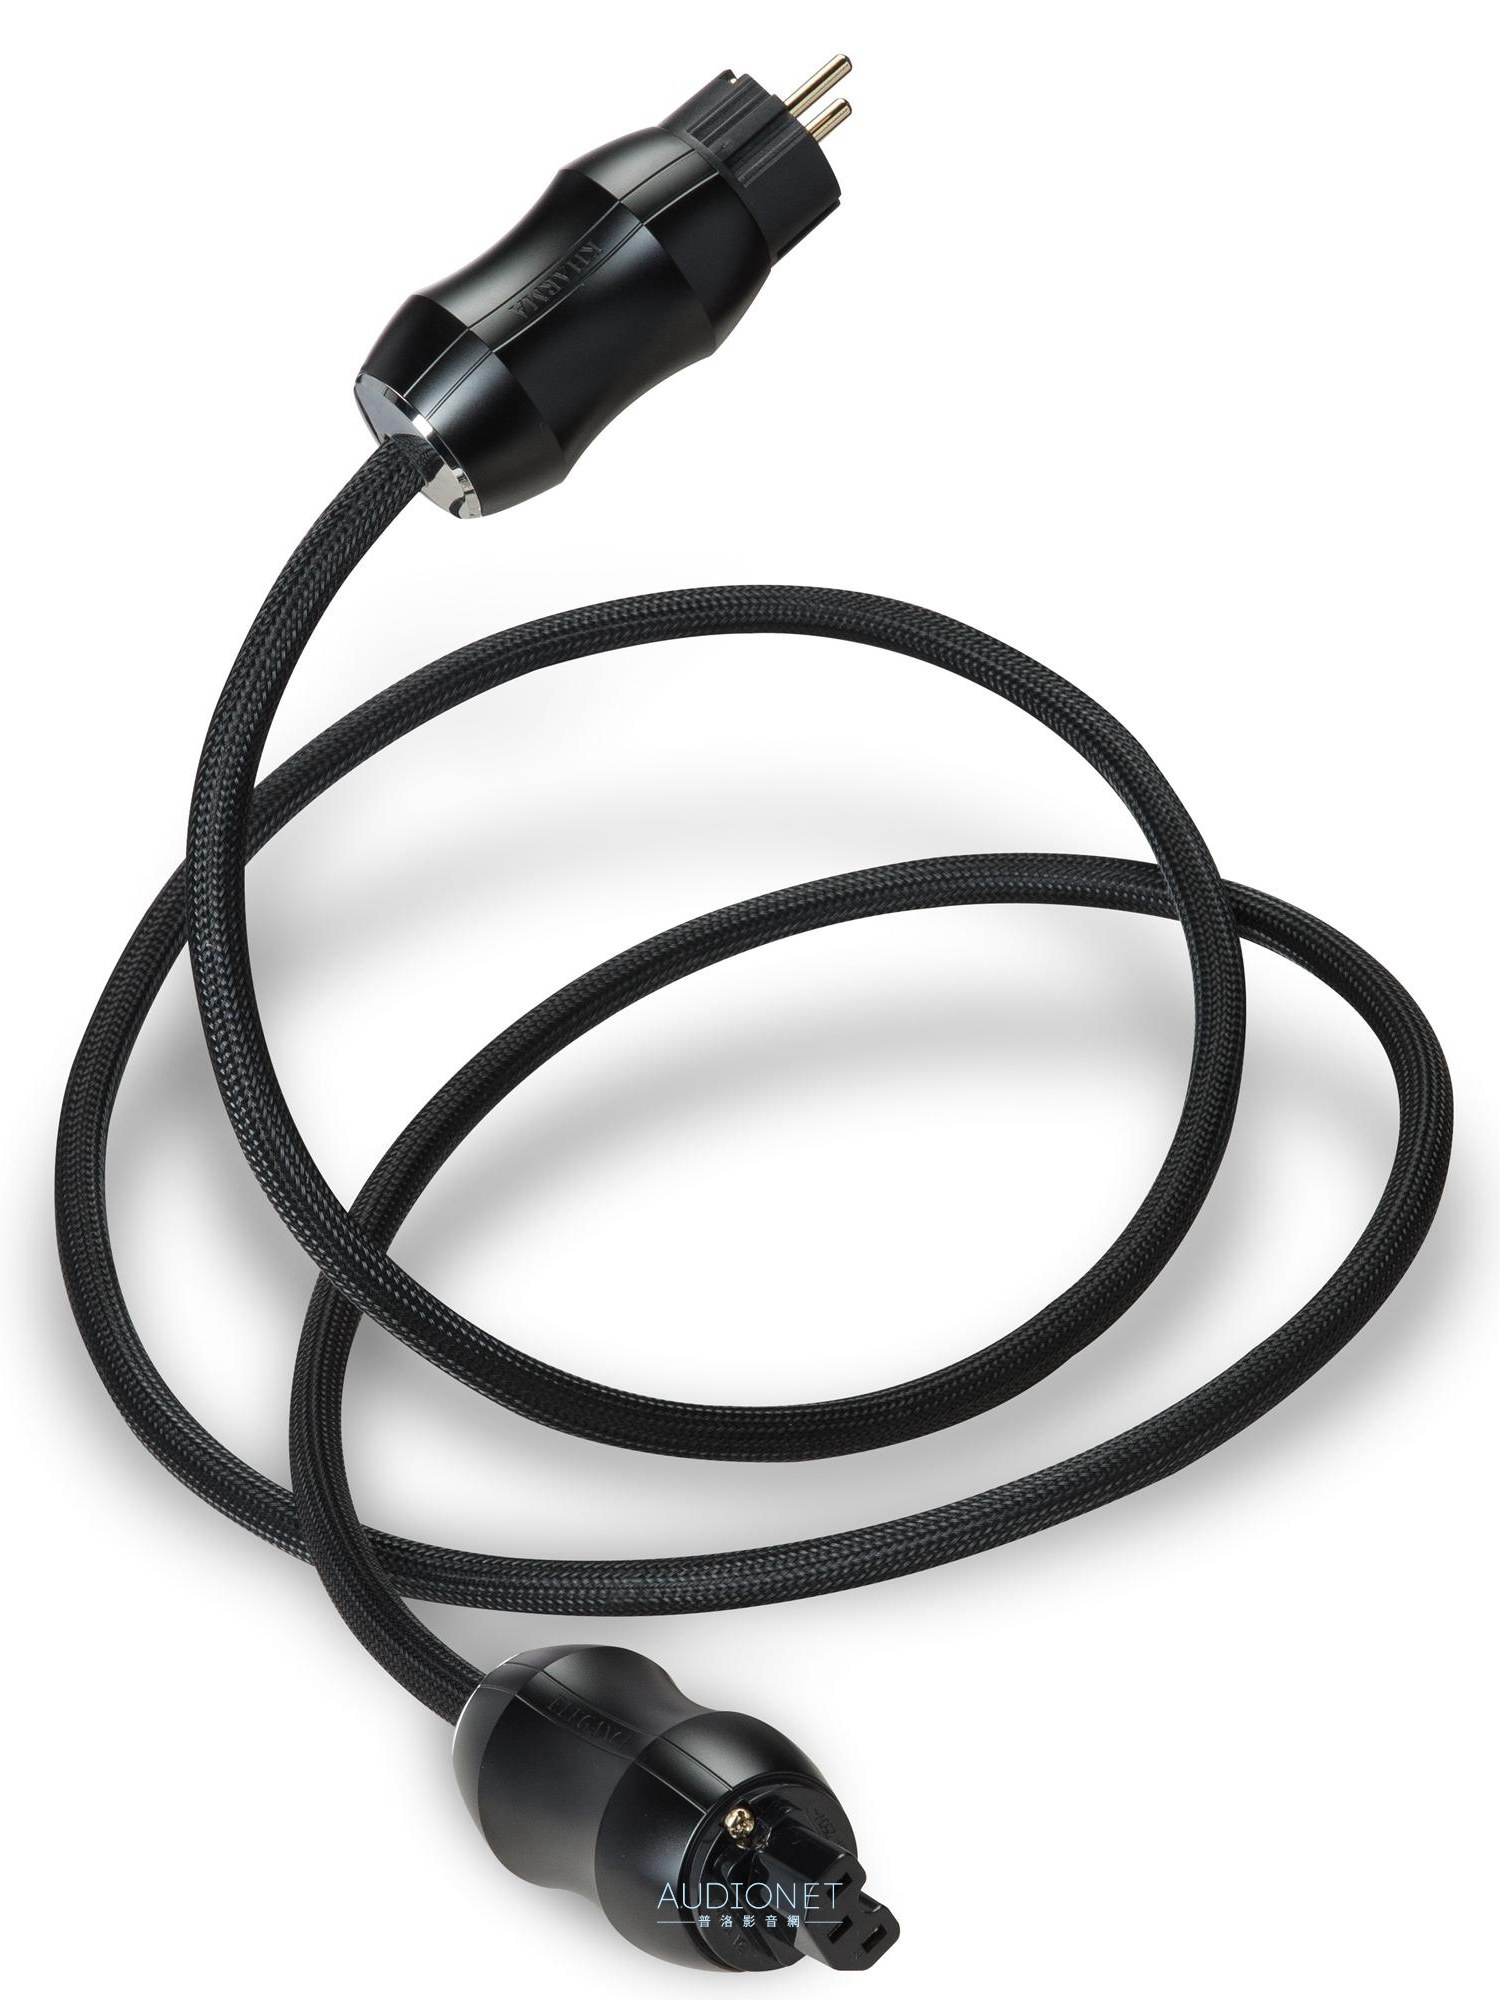 Kharma Elegance Cable極線試聽評測， 可能是Kharma性價比最高的產品